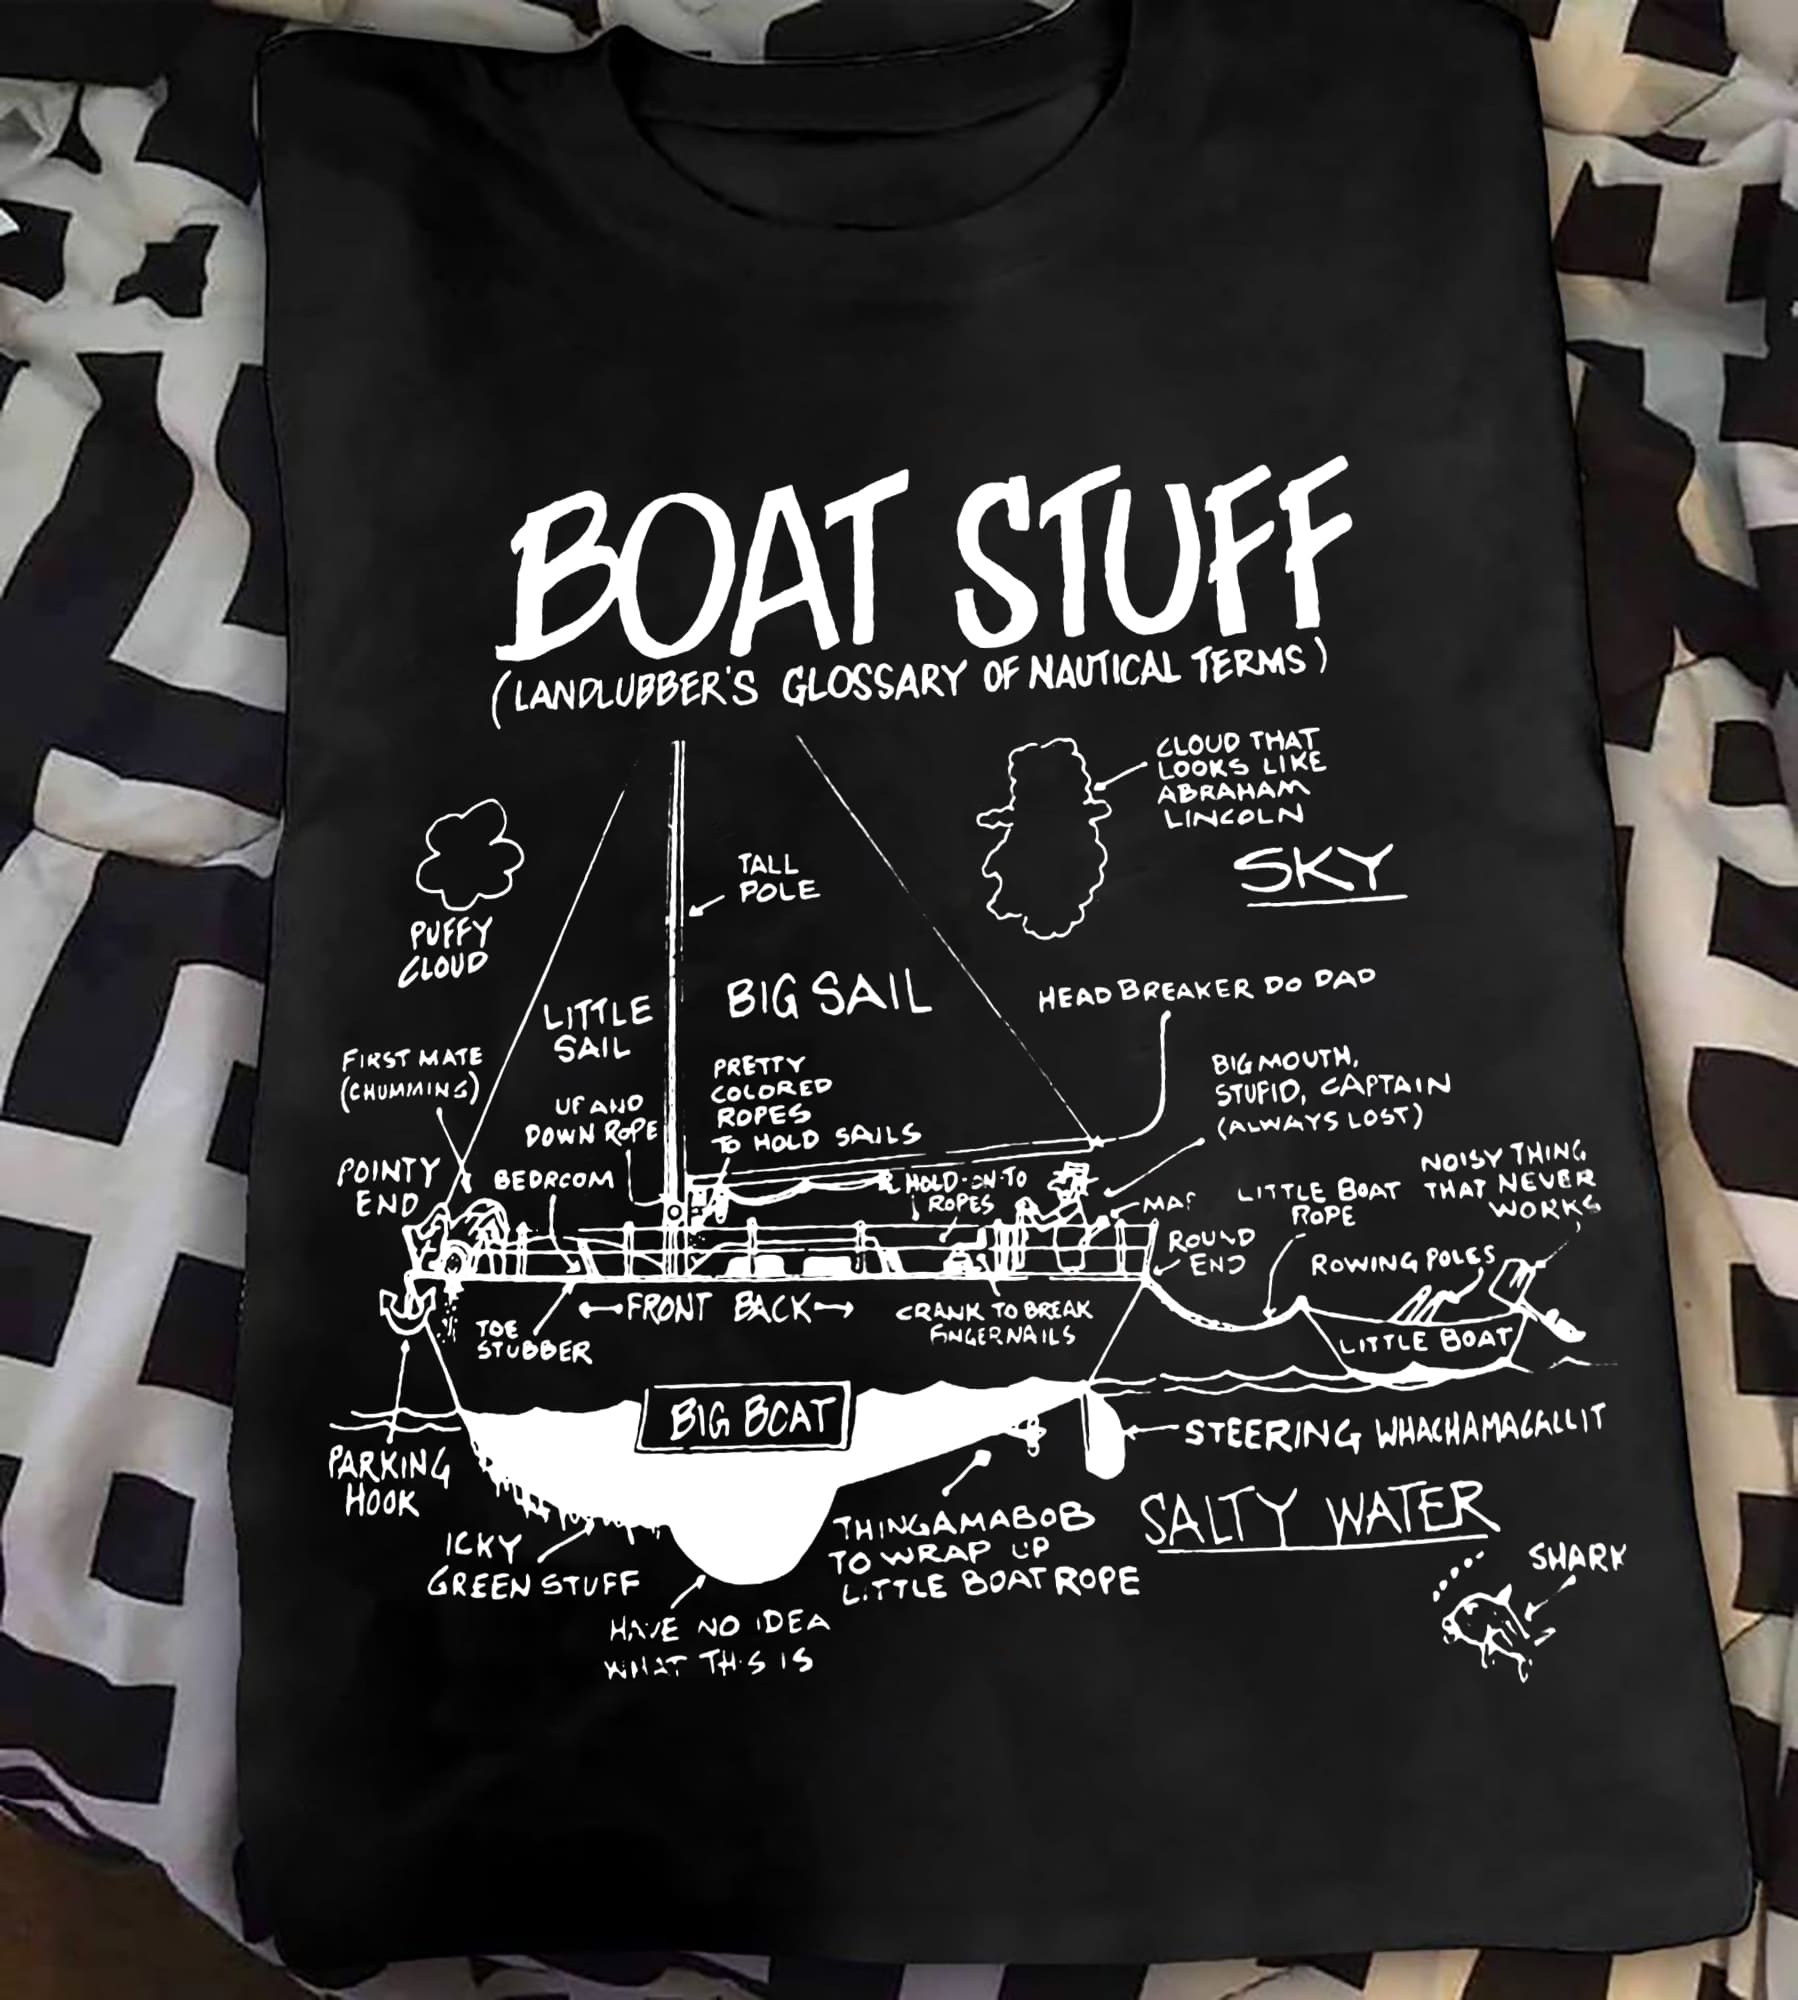 https://fridaystuff.com/wp-content/uploads/2022/01/Boat-stuff-Landlubbers-glossary-of-nautical-terms-puffy-cloud-little-sail.jpg